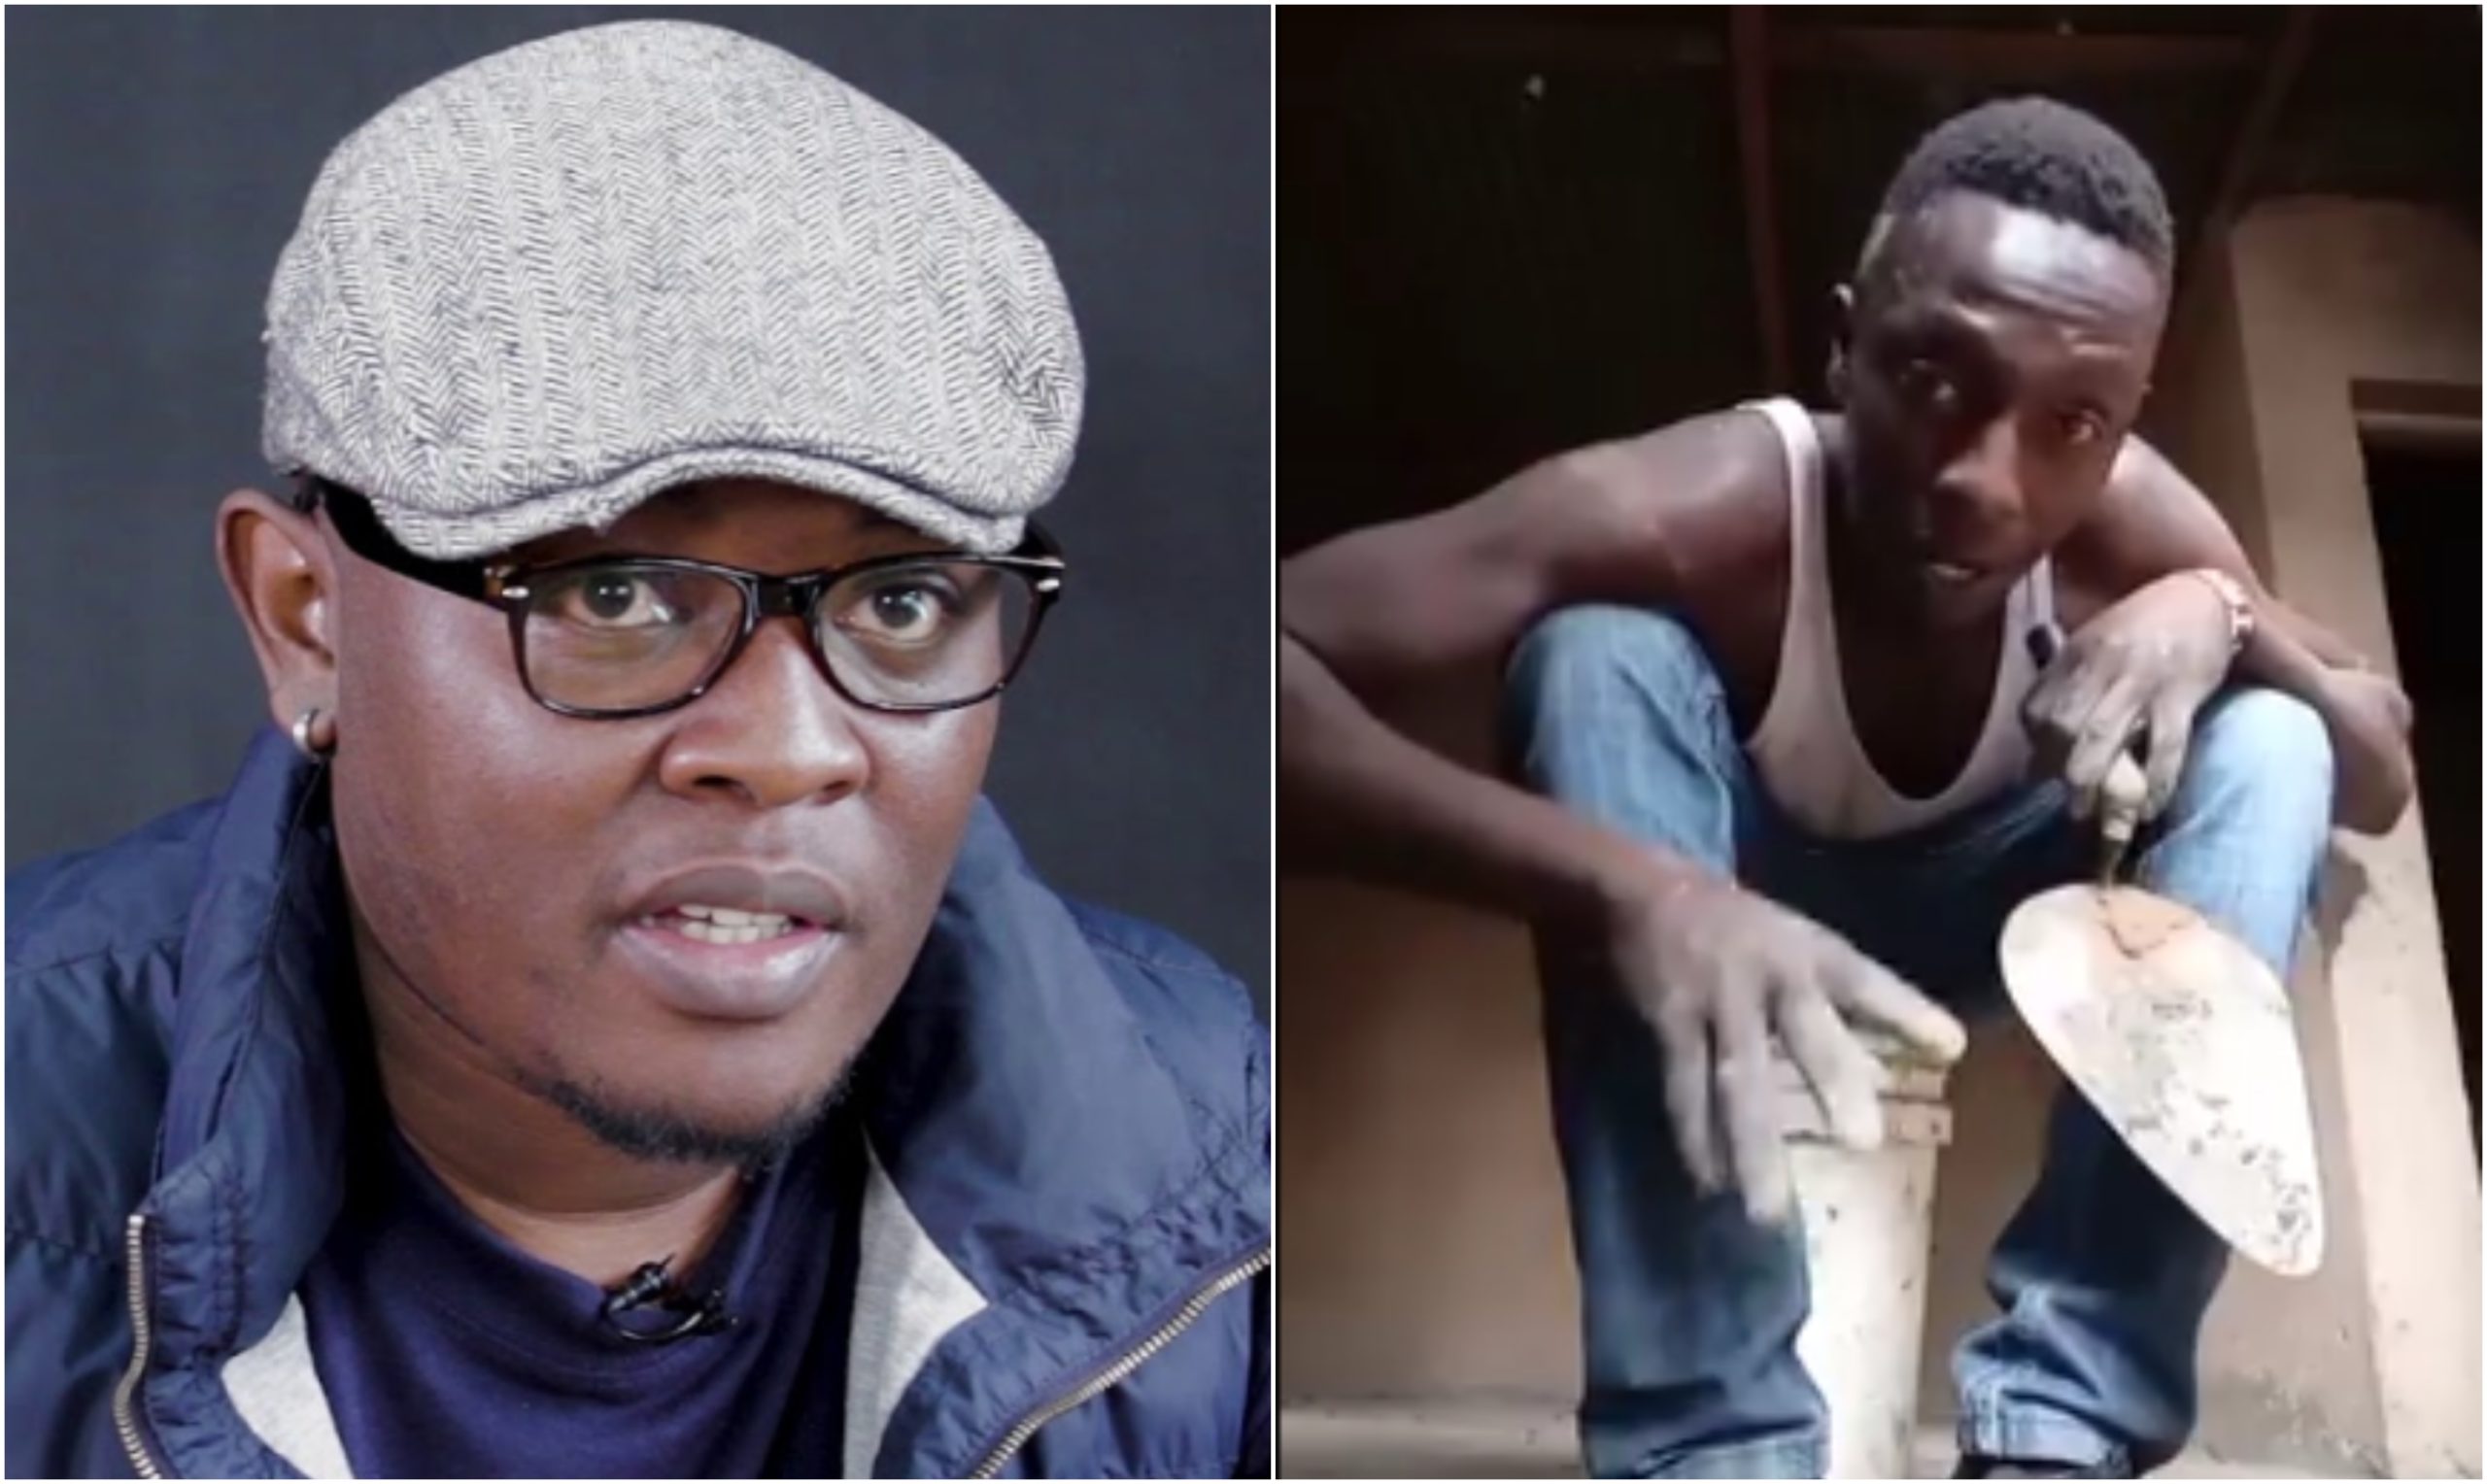 Mjengo laborer's melodic voice lands him major recording deal with veteran producer Tim Rimbui (Video)